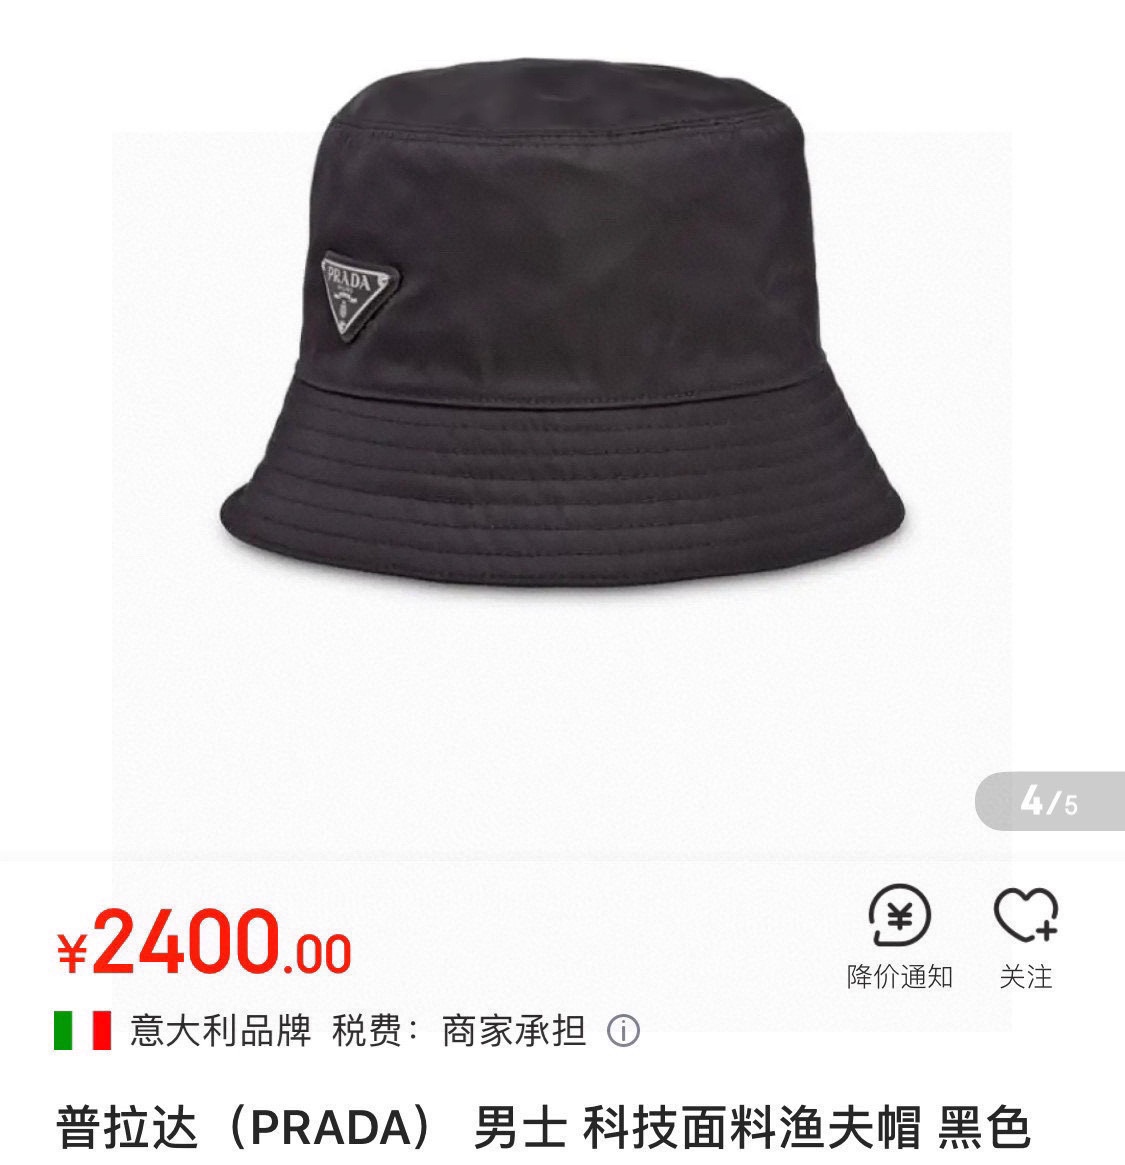 Prada Hats Bucket Hat Cotton Fashion